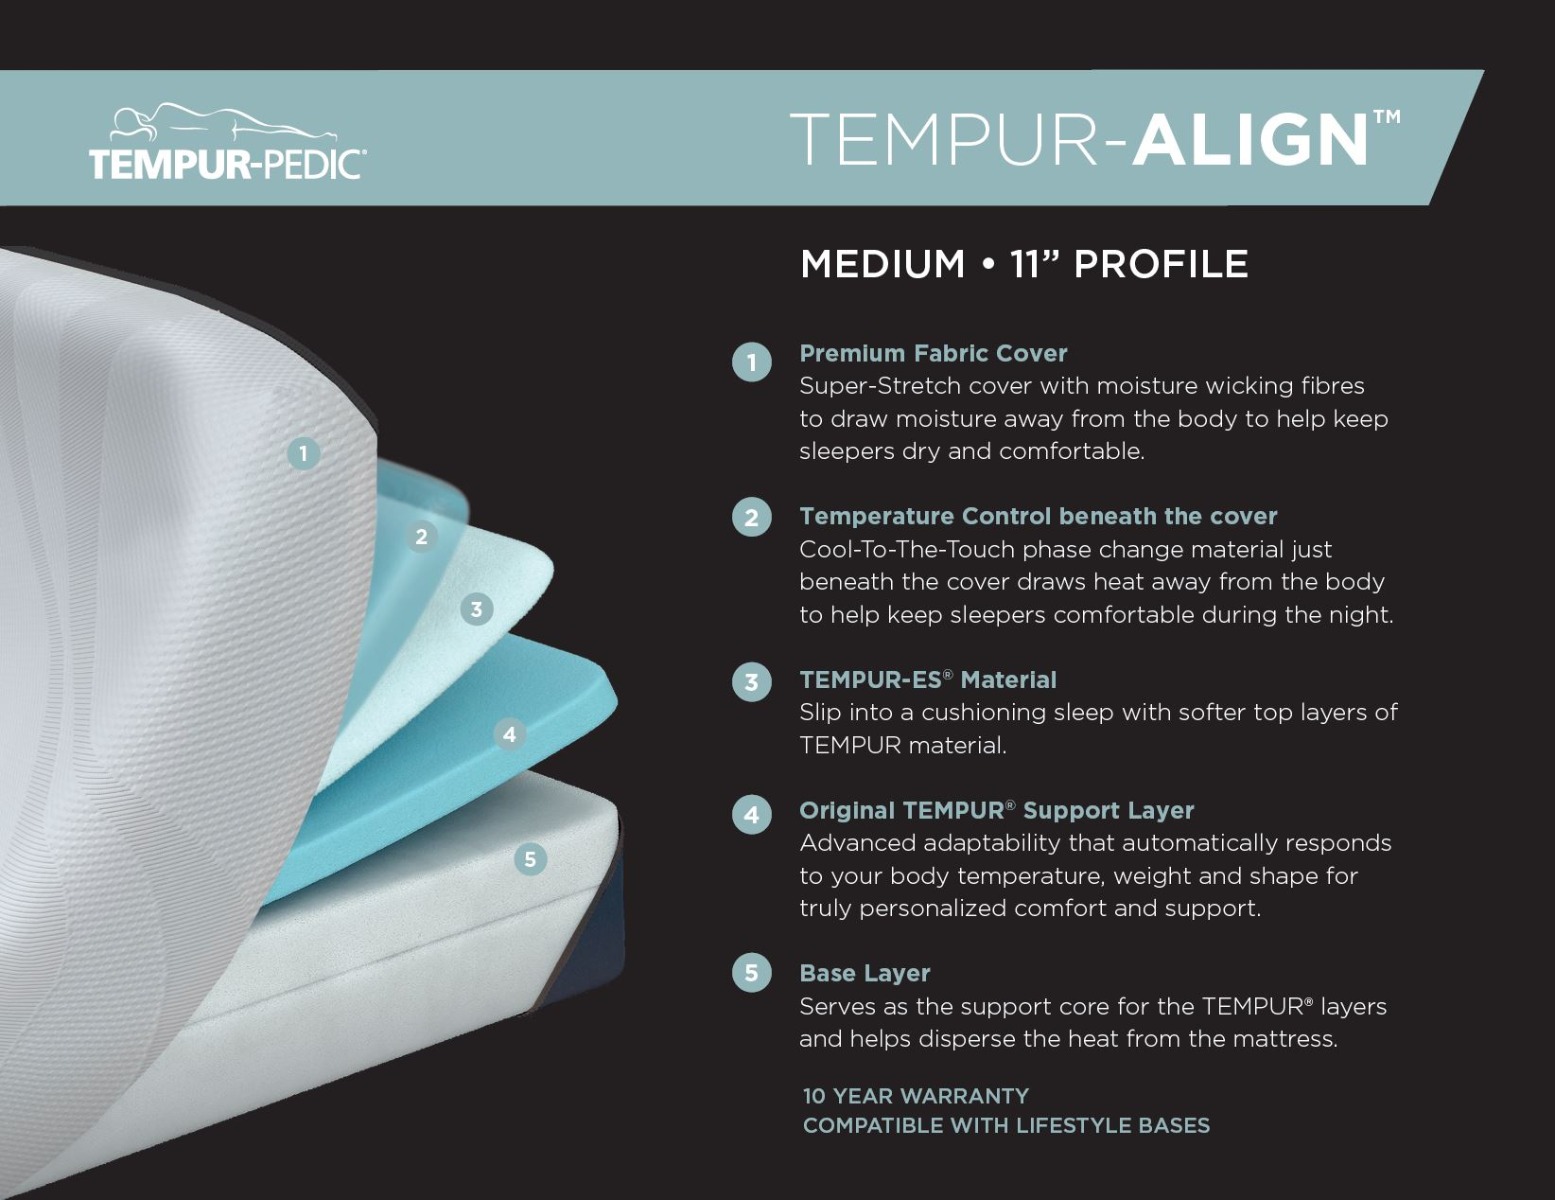 Tempur-pedic Tempur-Align Medium Firm Memory Foam Mattress Details